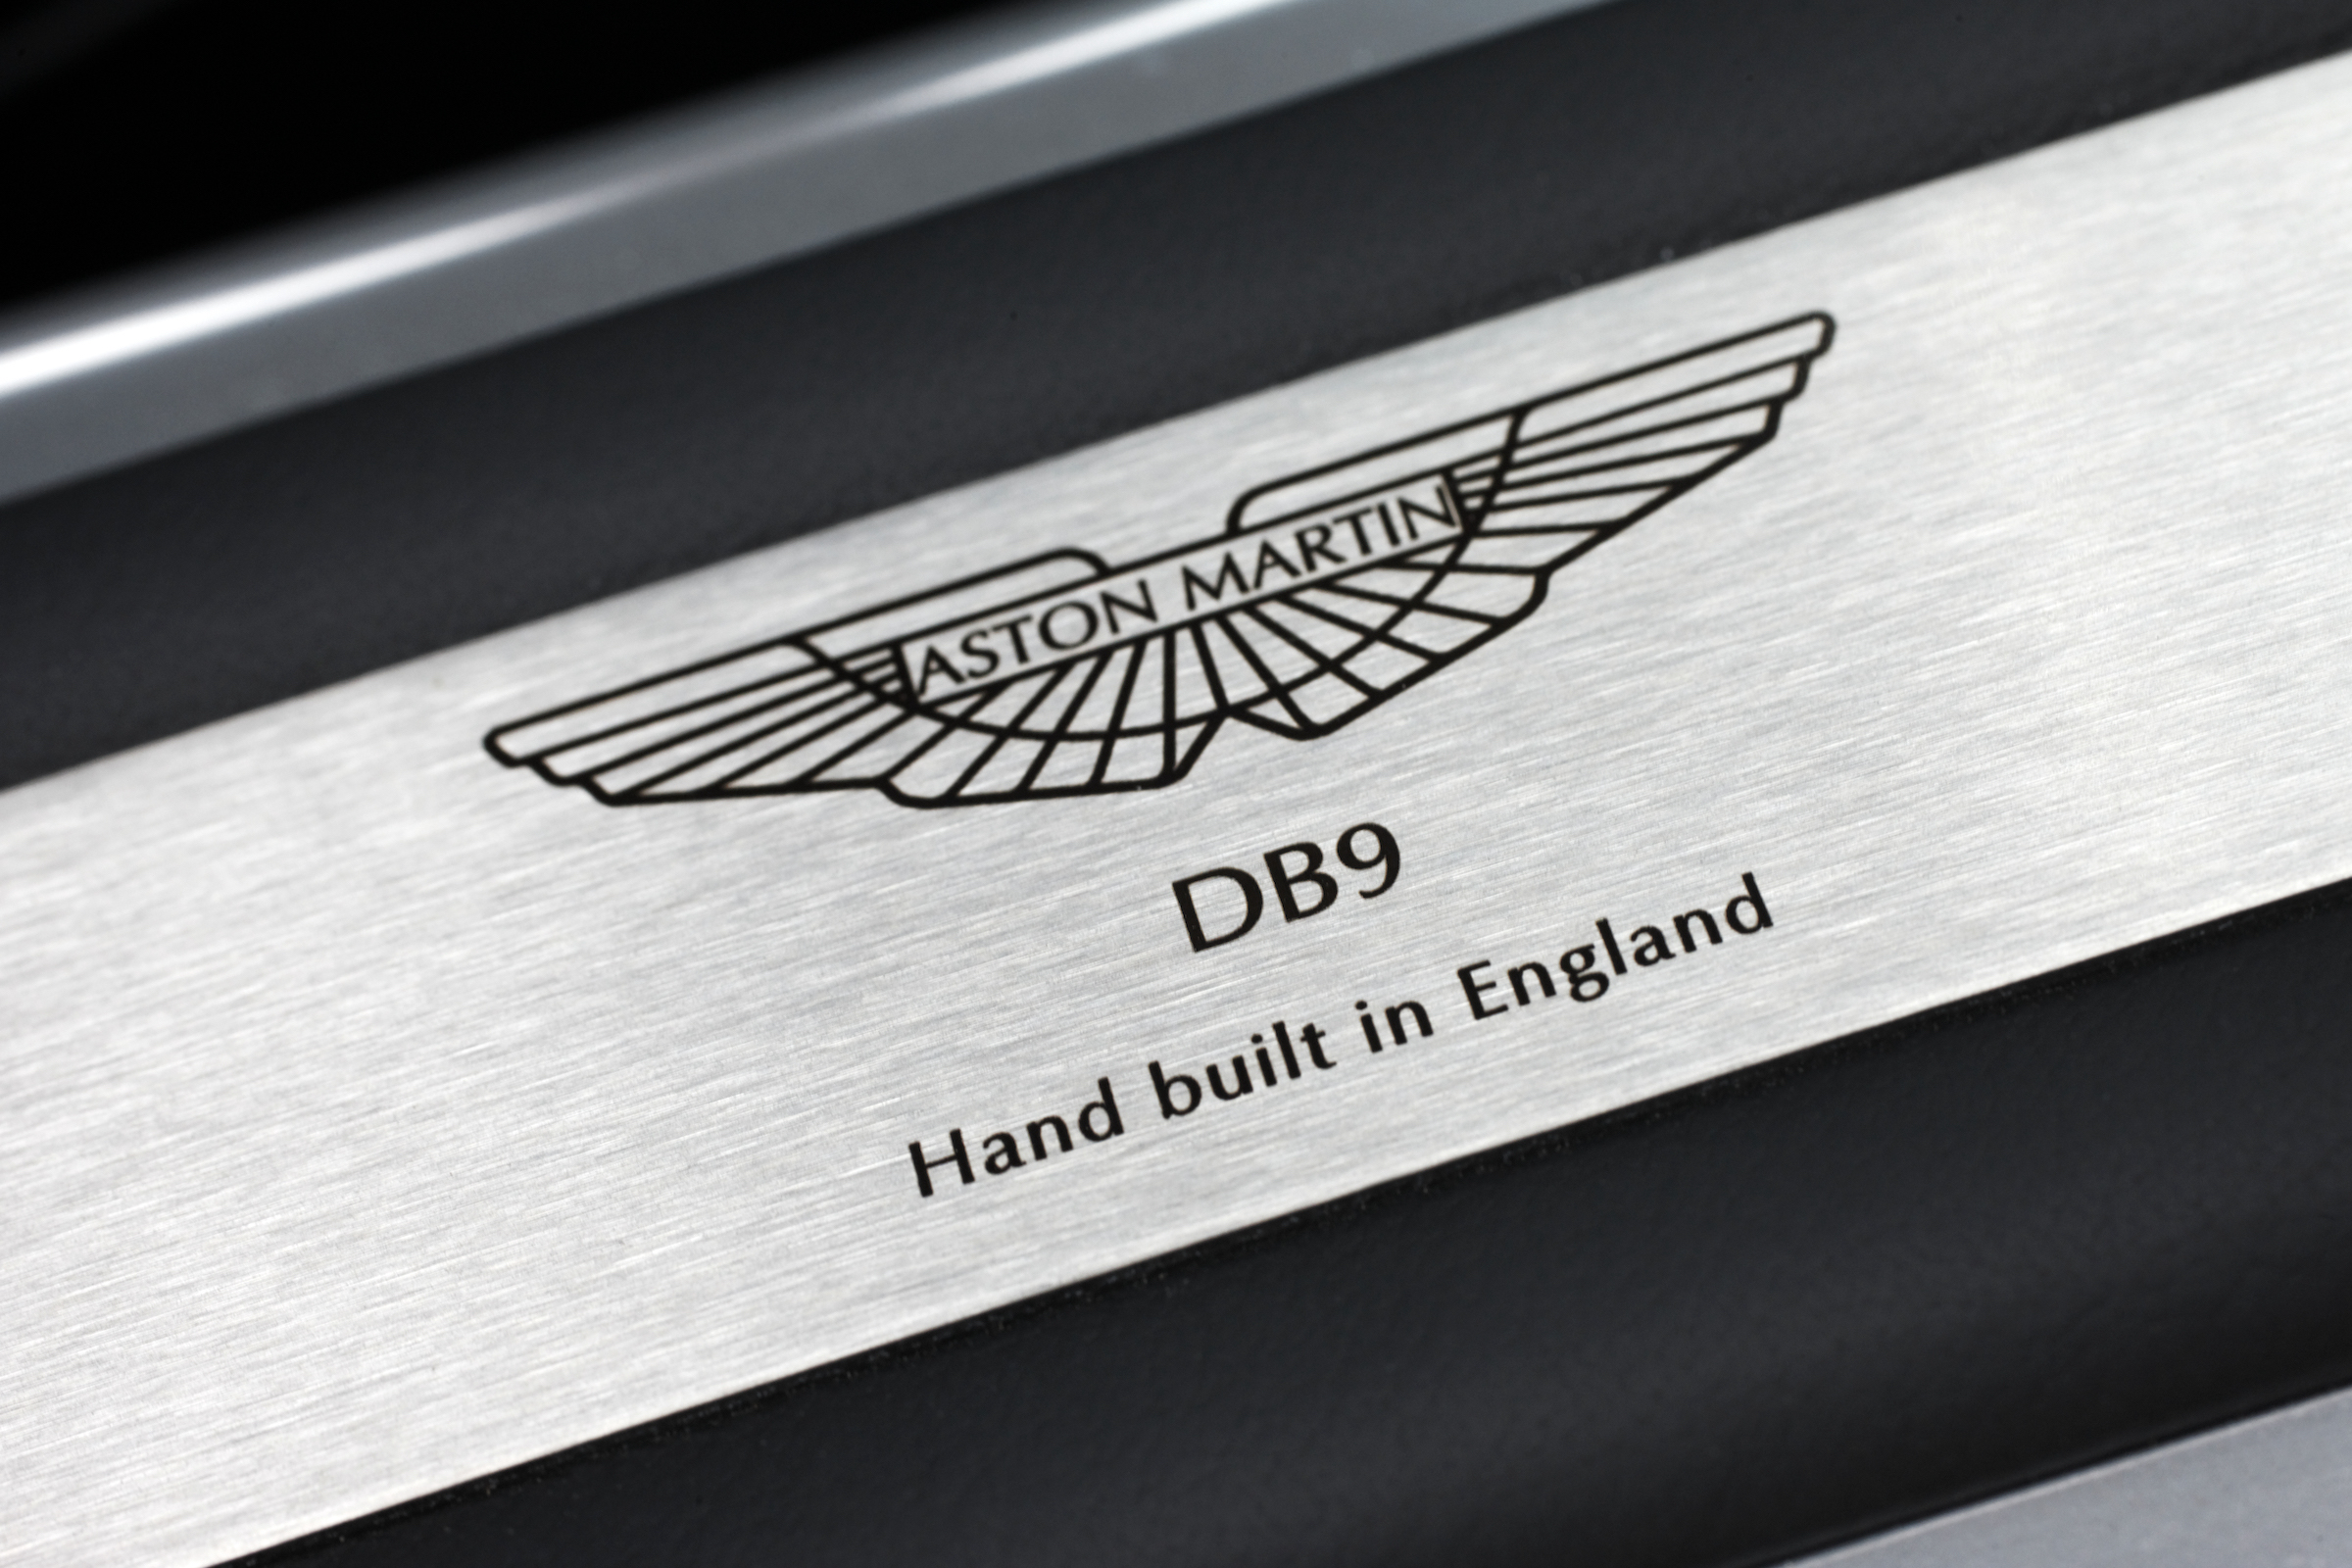 Aston Martin DB9 detail